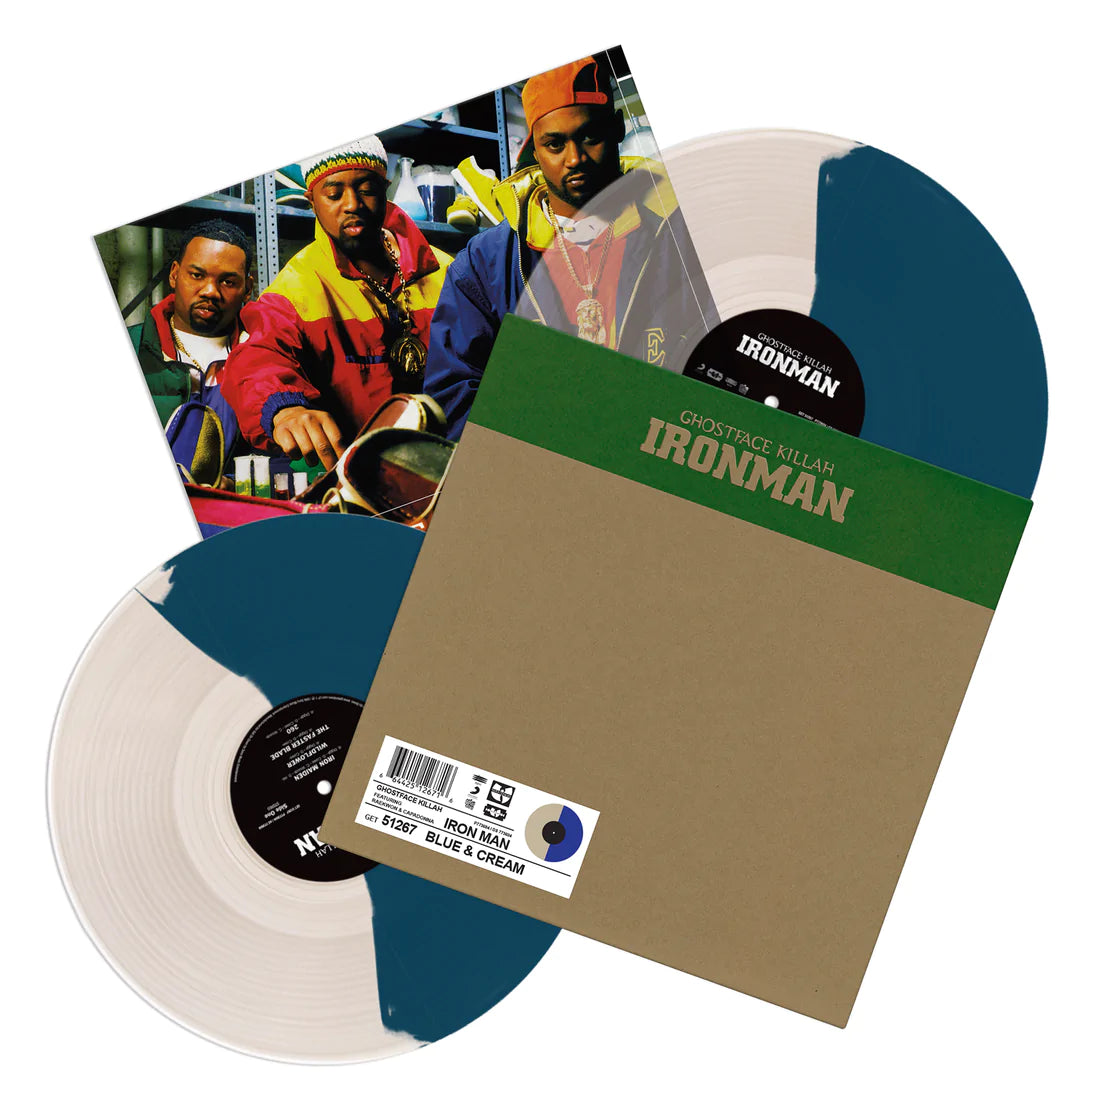 Brown Vinyl Records - Find Colored Vinyl